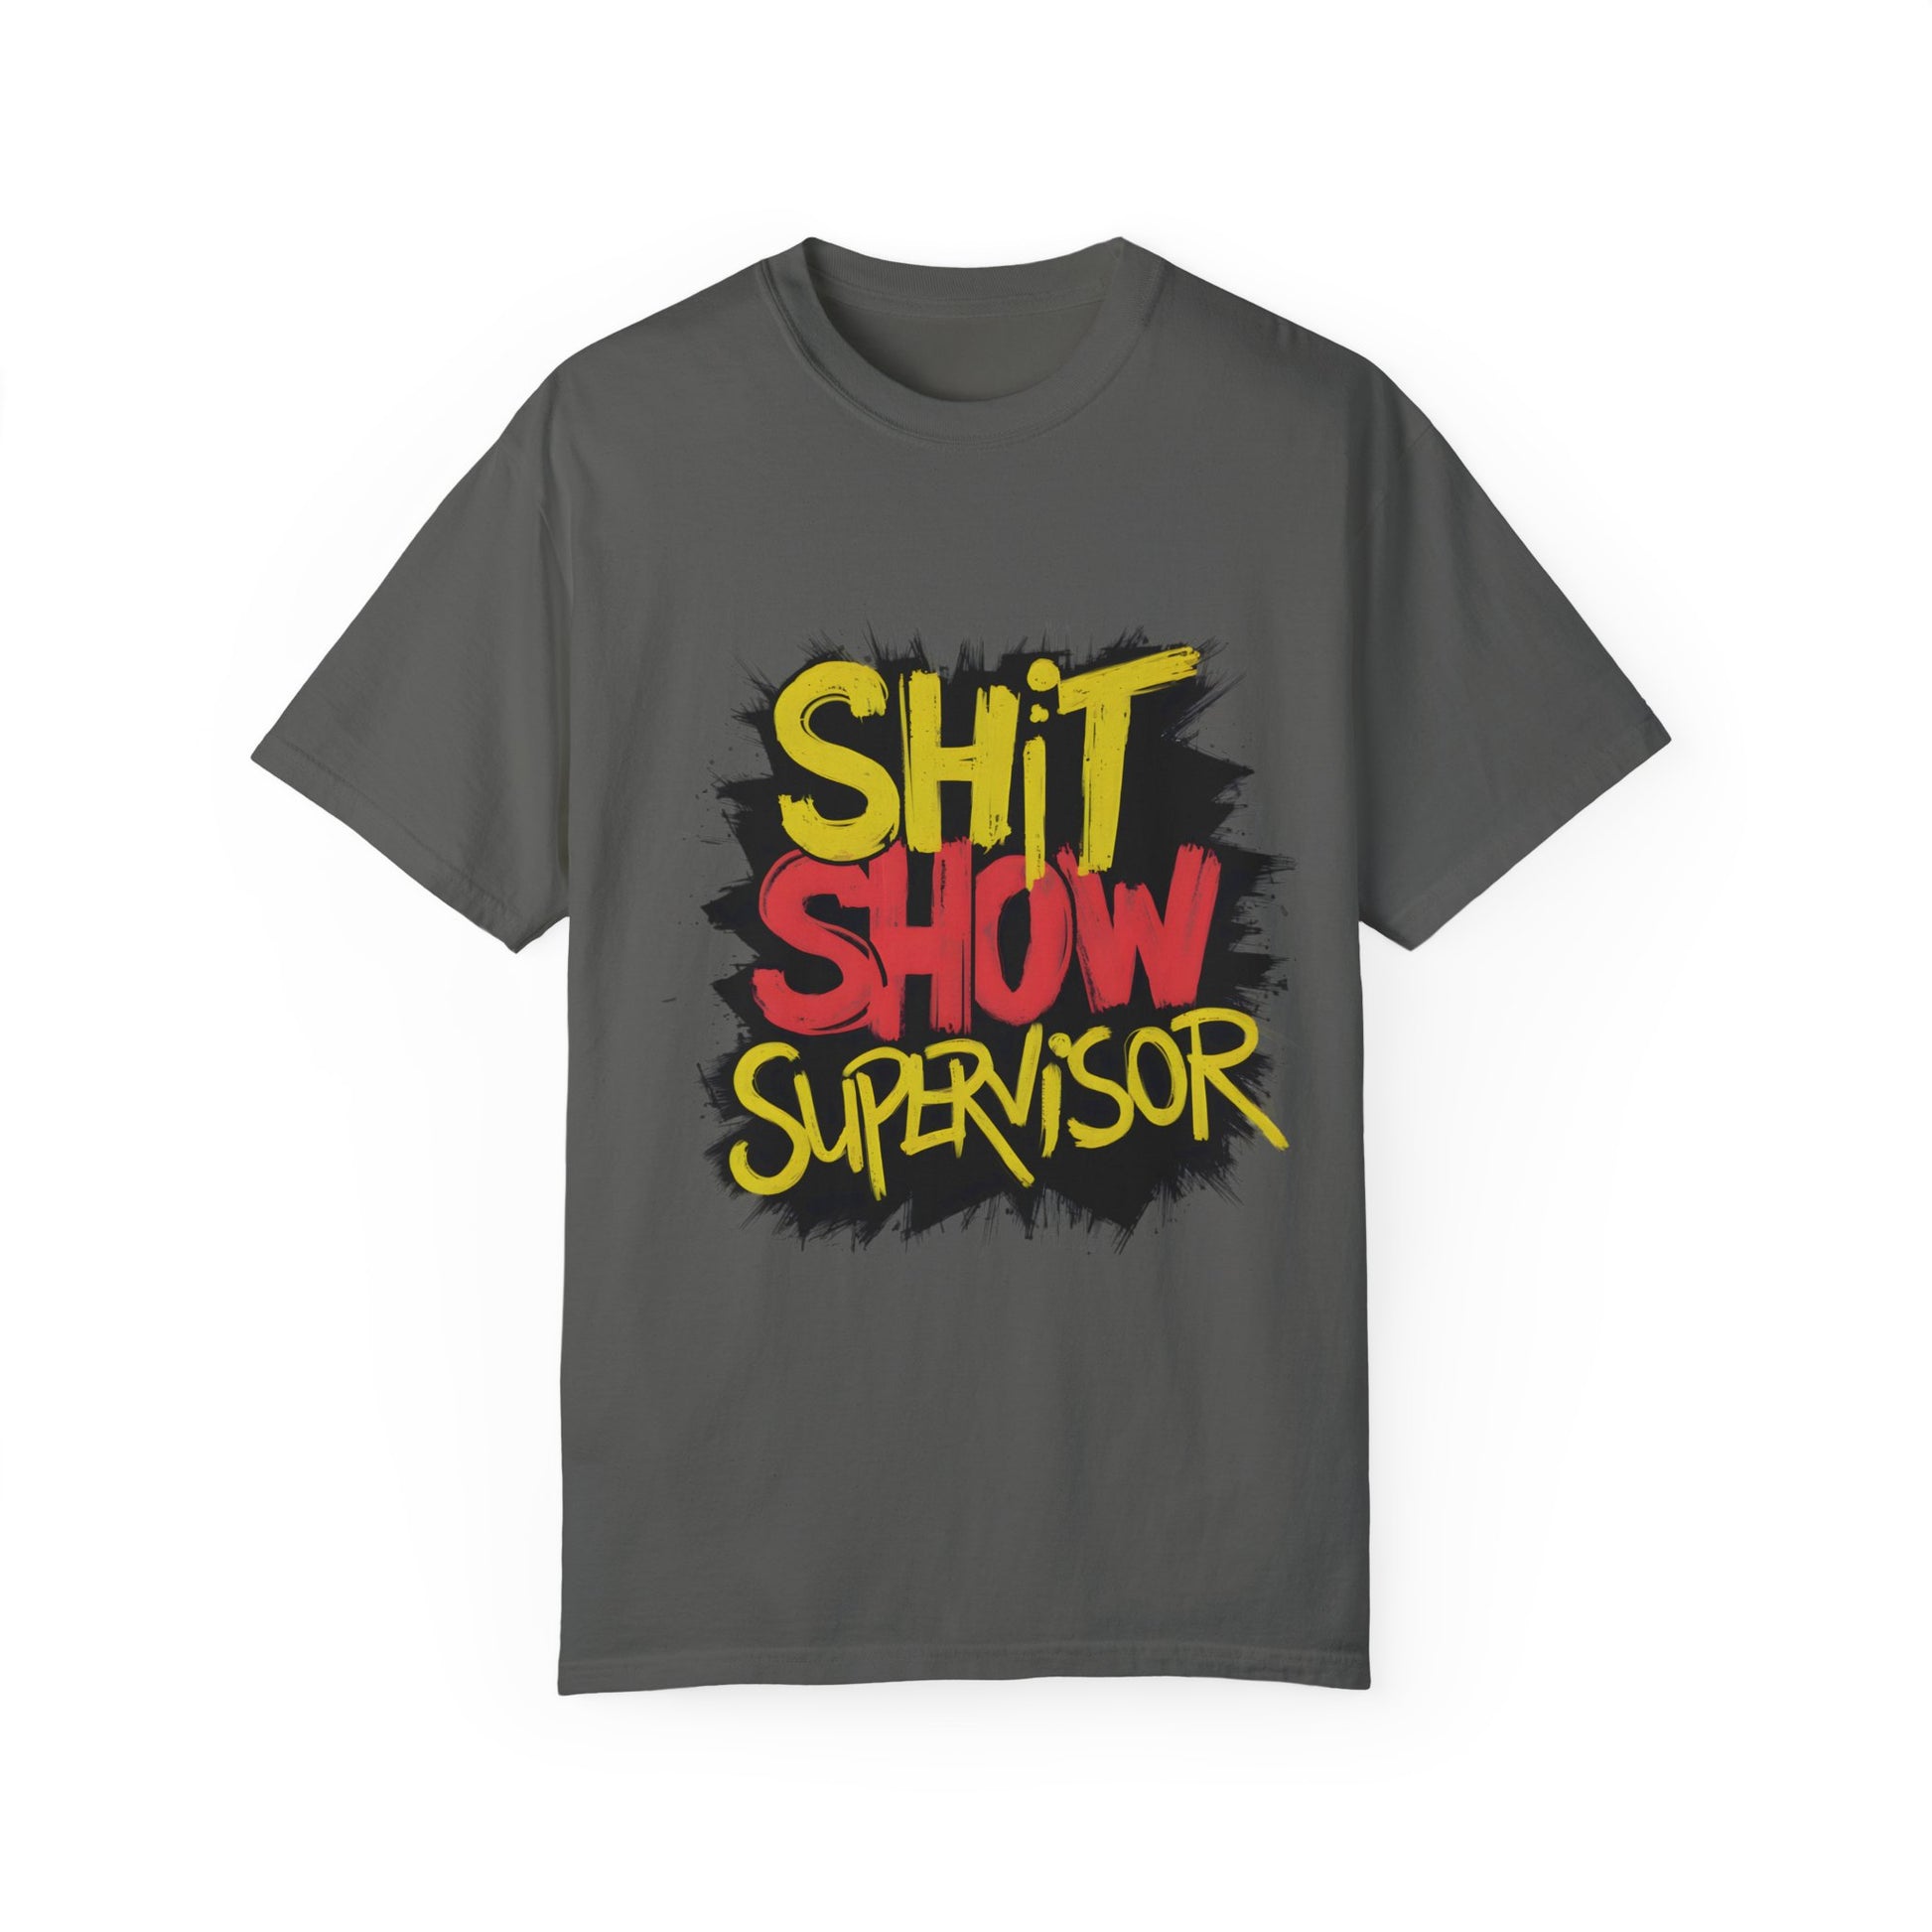 Shit Show Supervisor Urban Sarcastic Graphic Unisex Garment Dyed T-shirt Cotton Funny Humorous Graphic Soft Premium Unisex Men Women Pepper T-shirt Birthday Gift-12